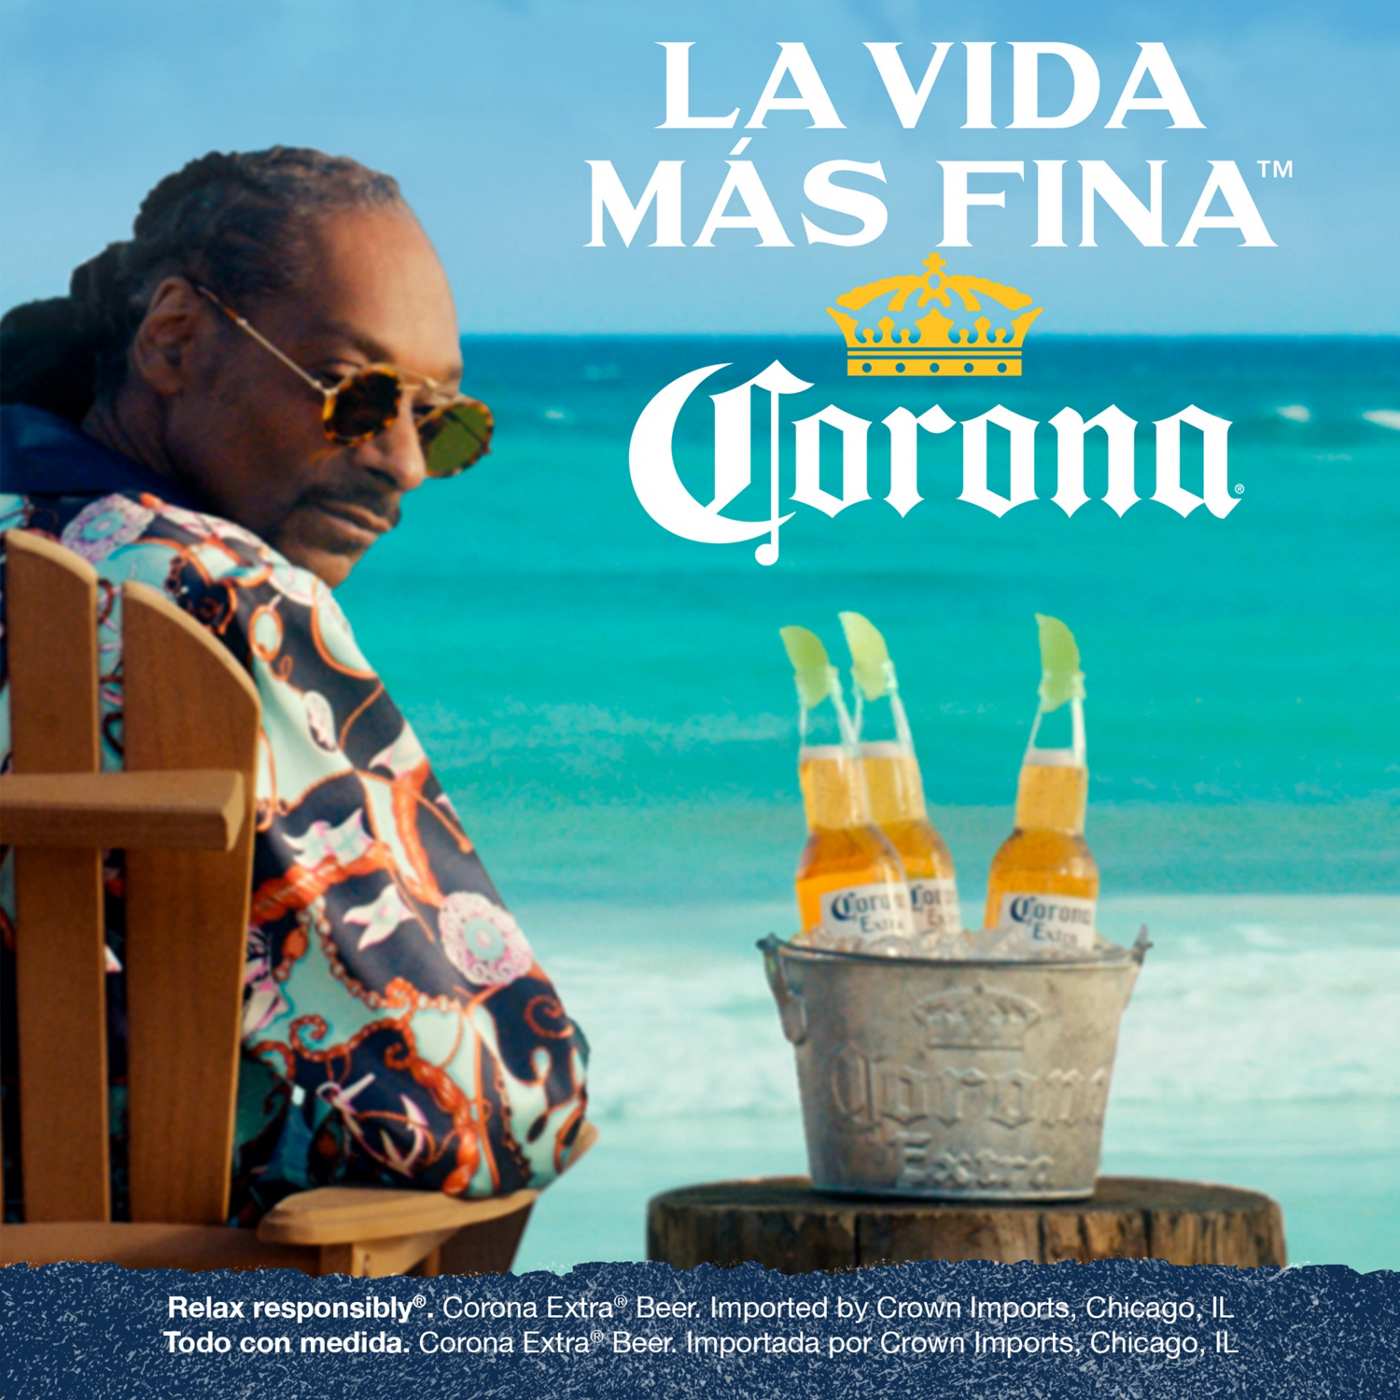 Corona Extra Coronita Lager Mexican Beer 6 pk Bottles; image 6 of 11